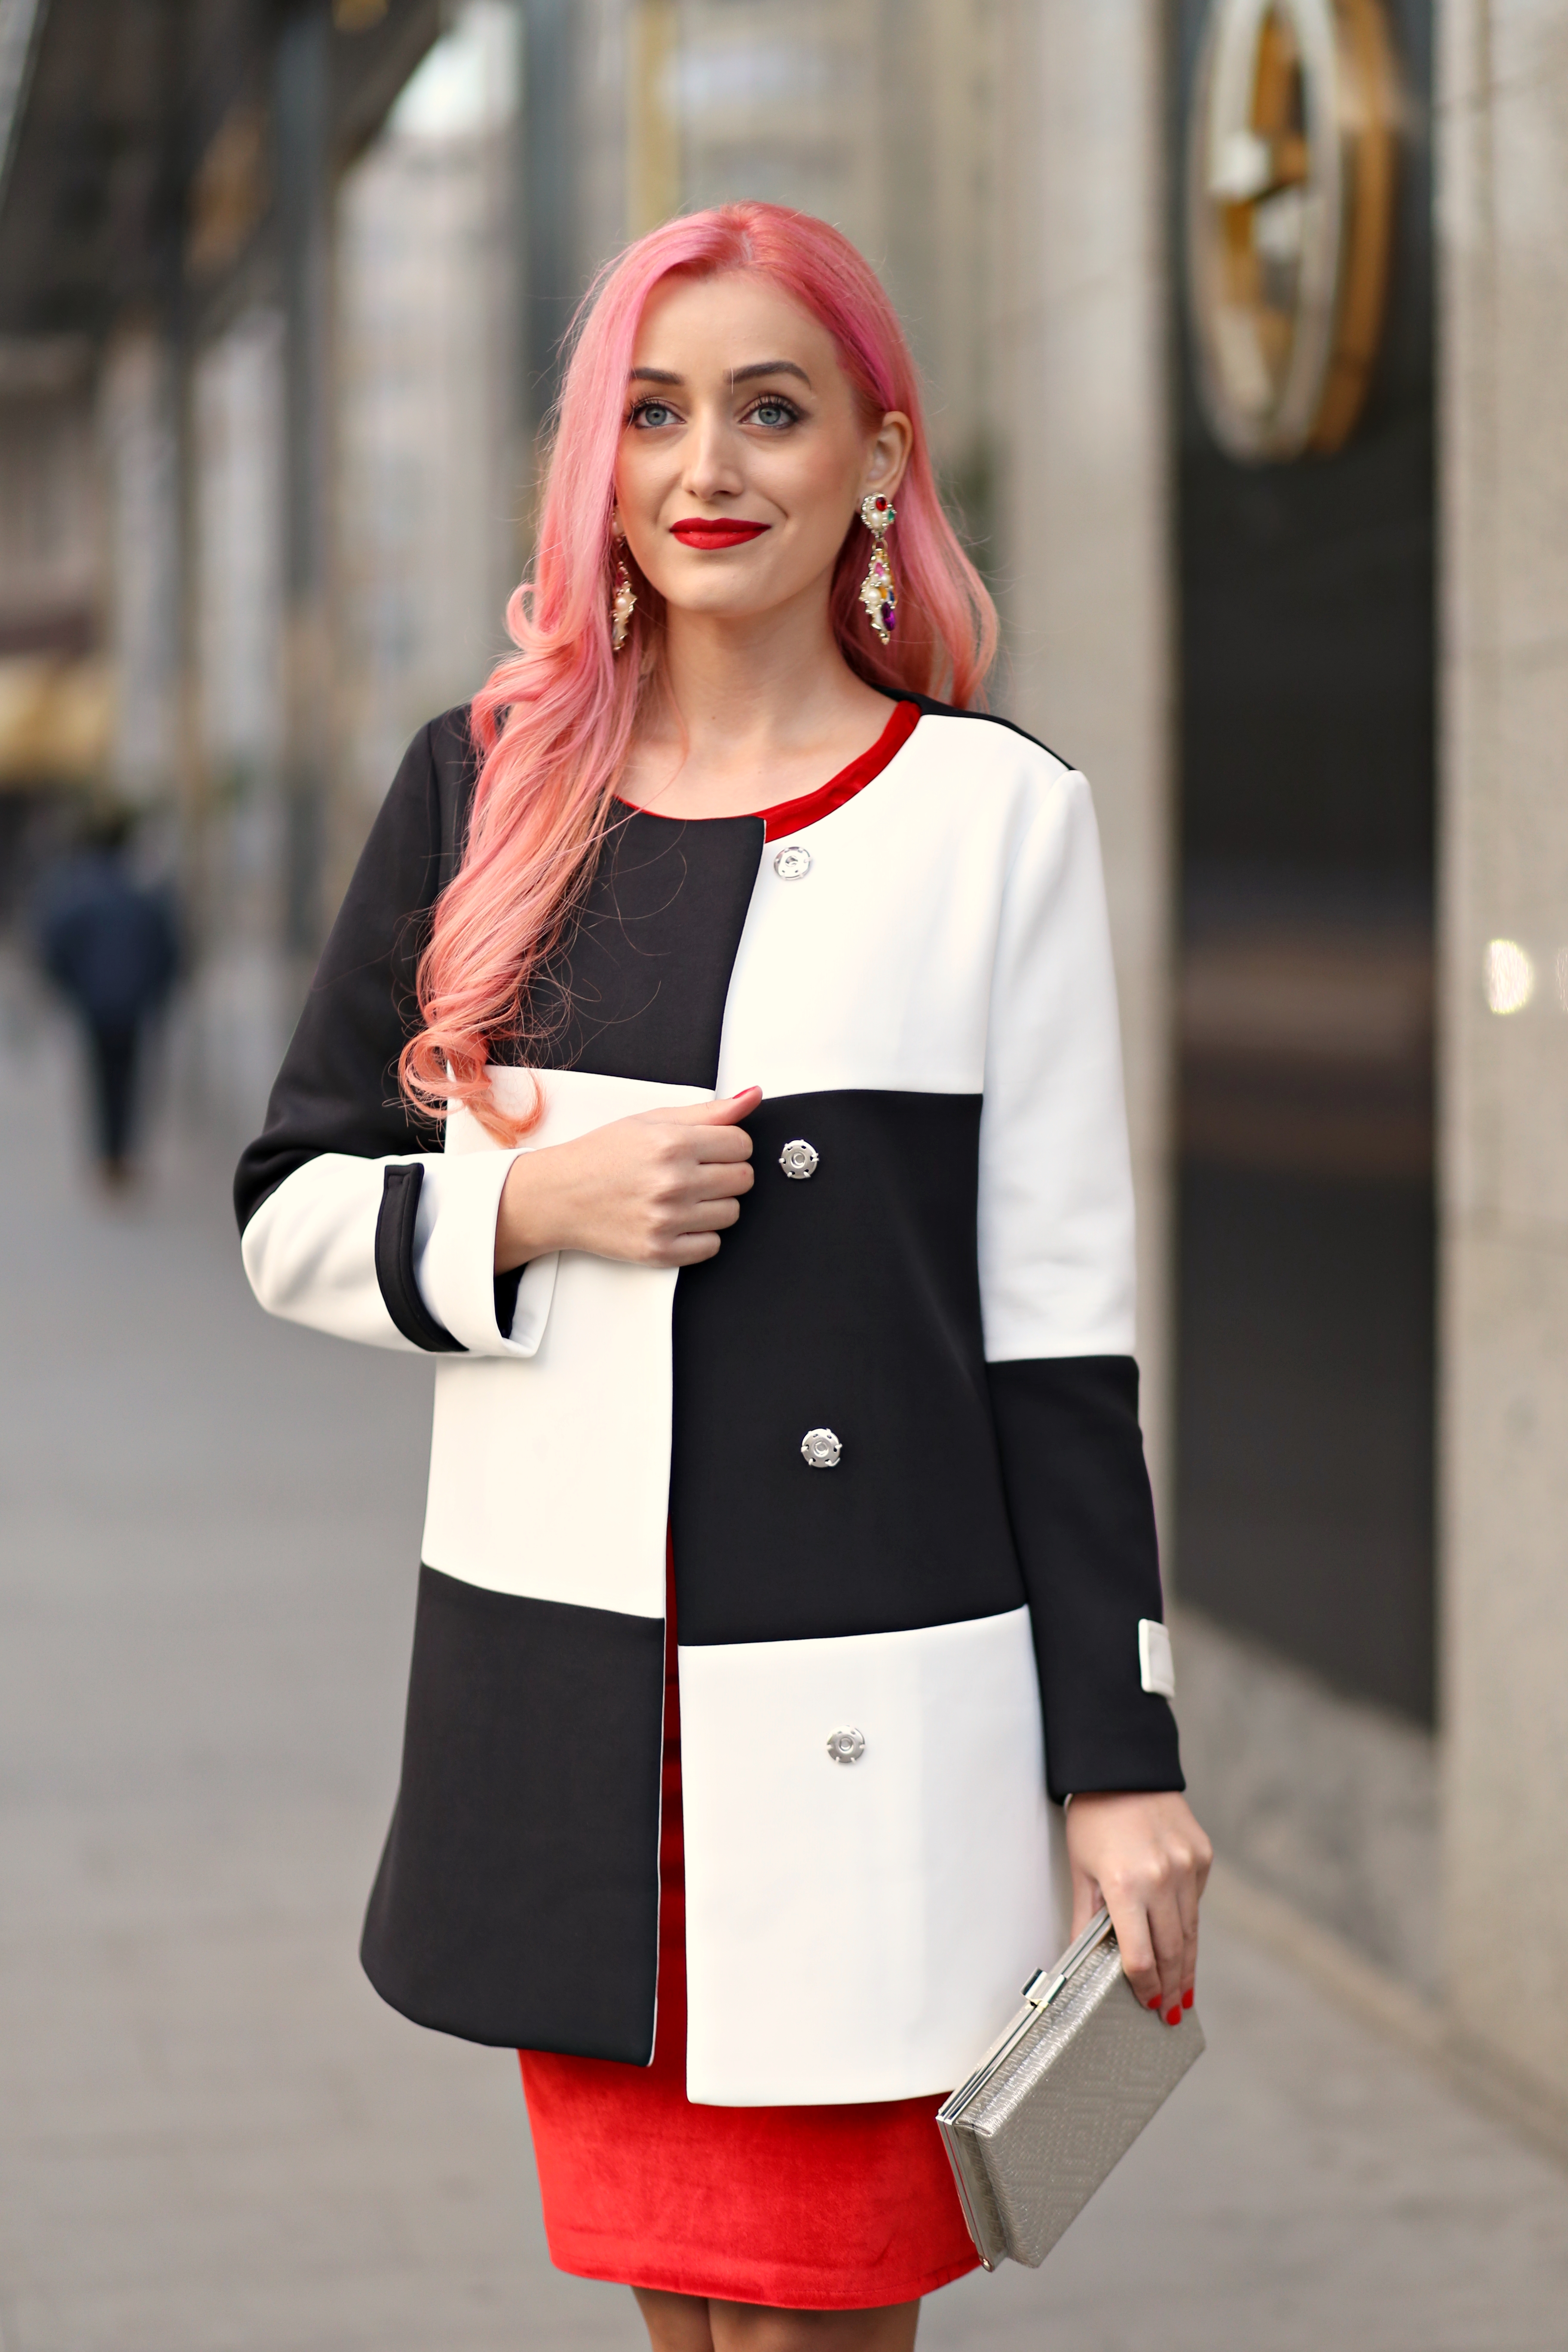 christmassy_outfit_red_velvet_dress_black_white_coat_she_in_madalina_misu (10)